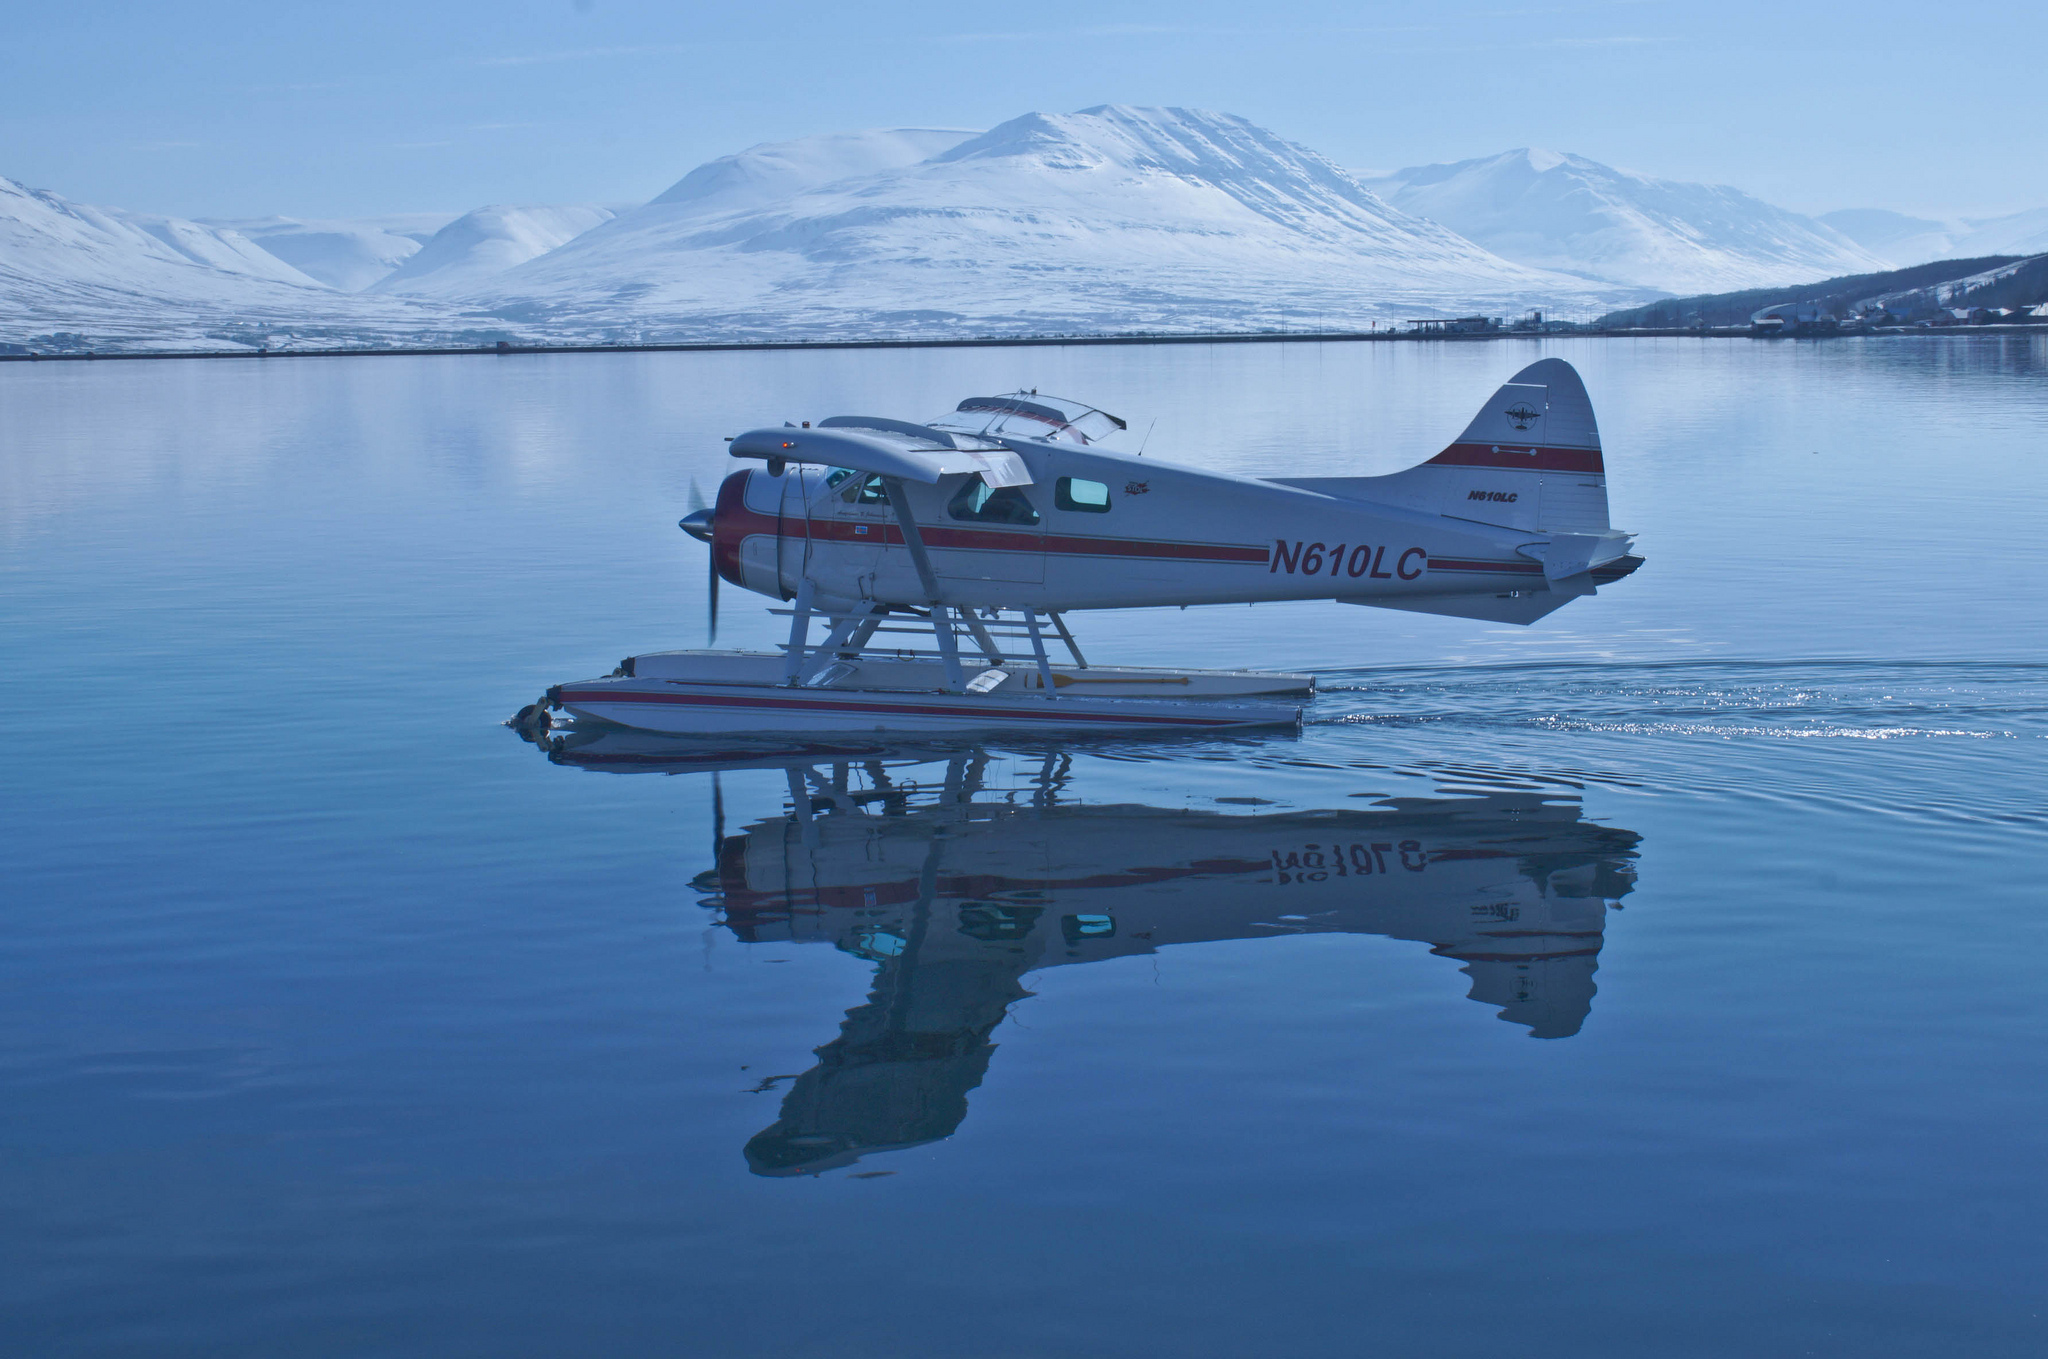 sweden, dhc 2 beaver, vehicles, aircraft, airplane, de havilland, mountain, reflection, seaplane, snow, water, winter